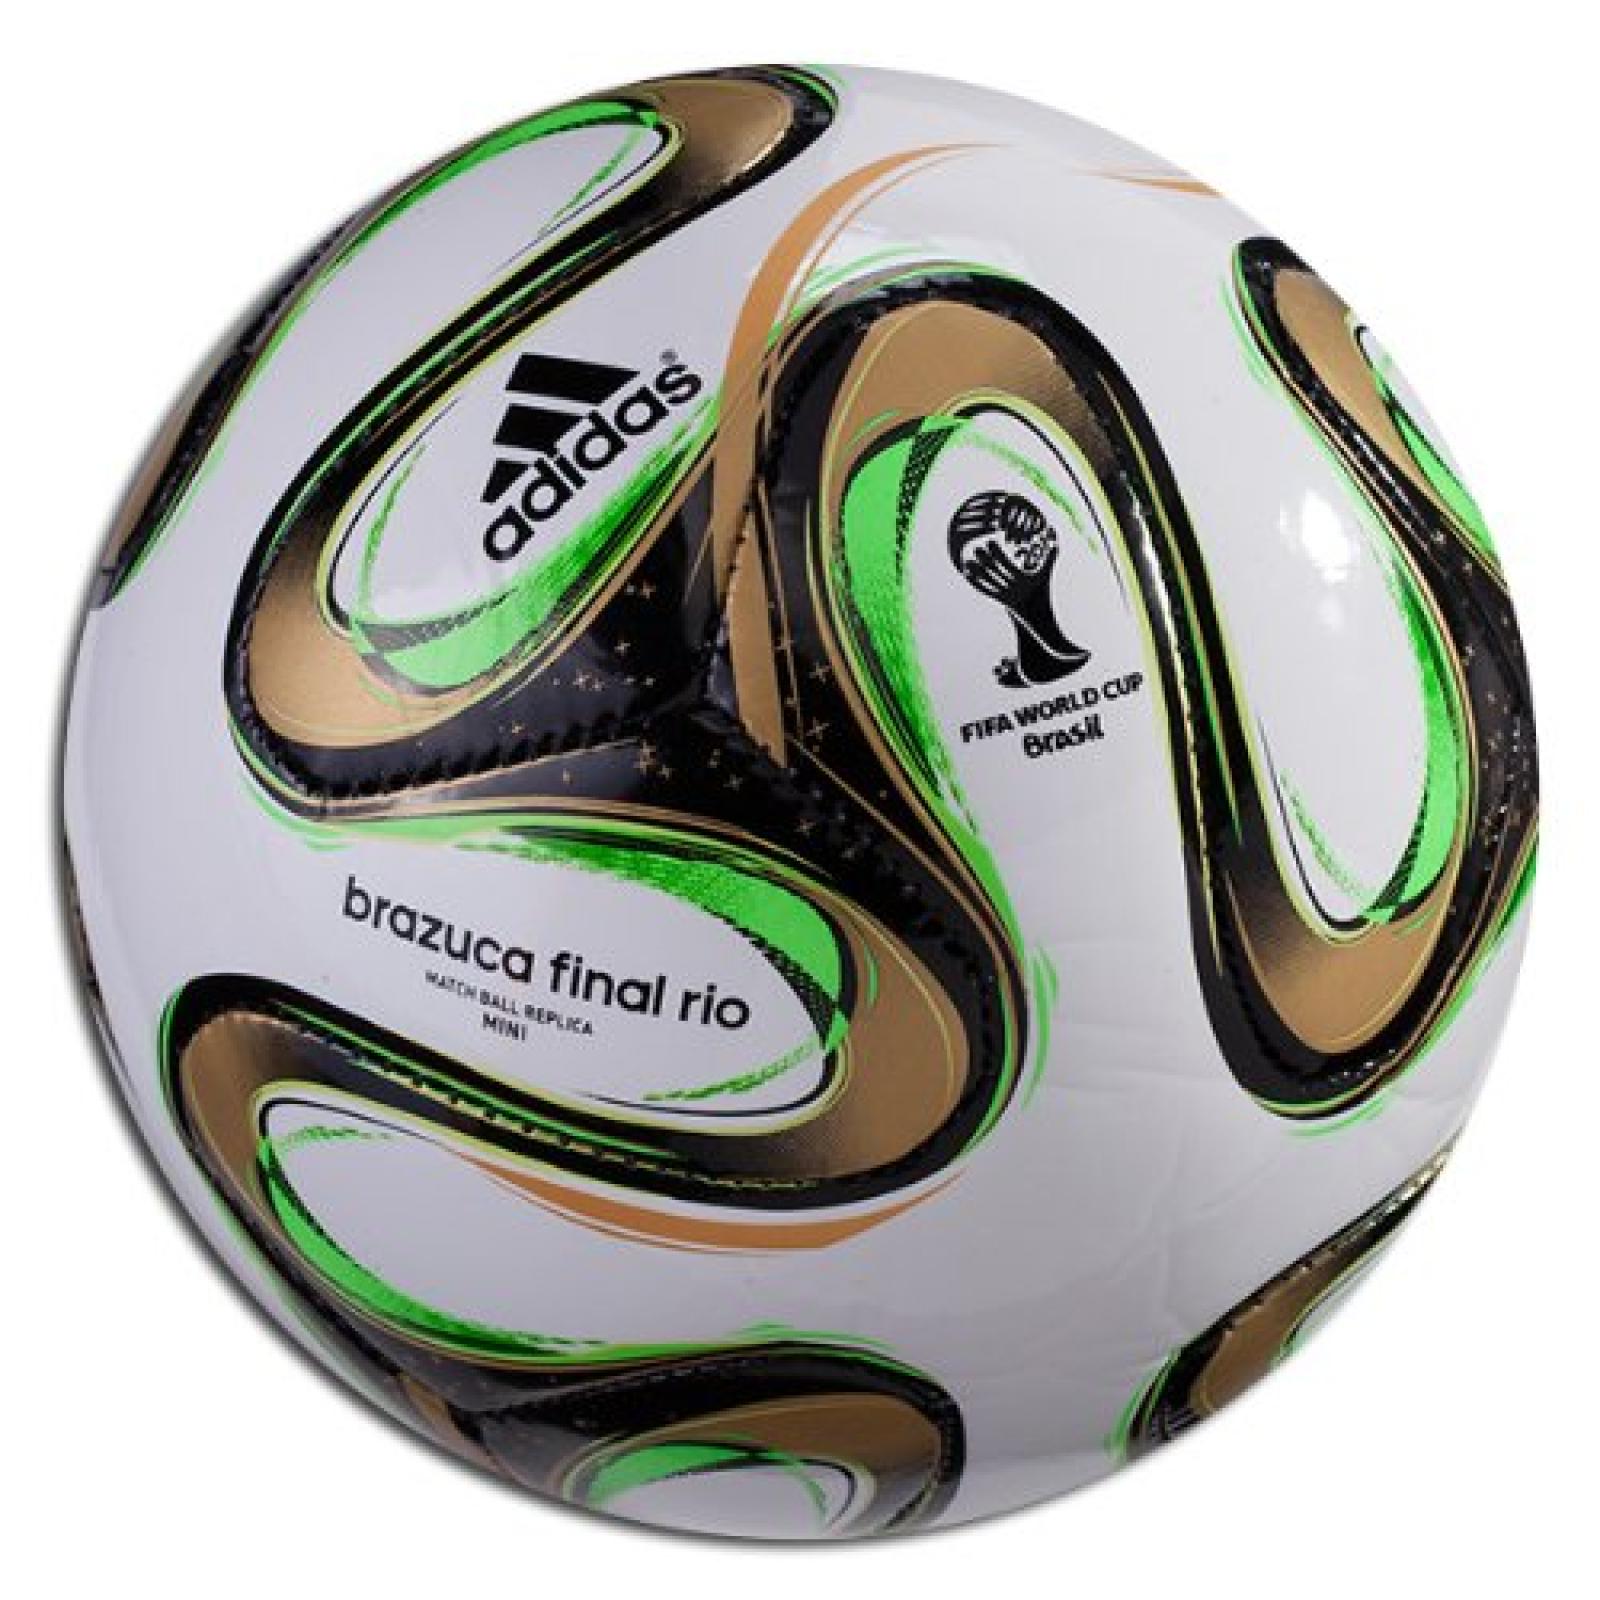 world cup mini ball